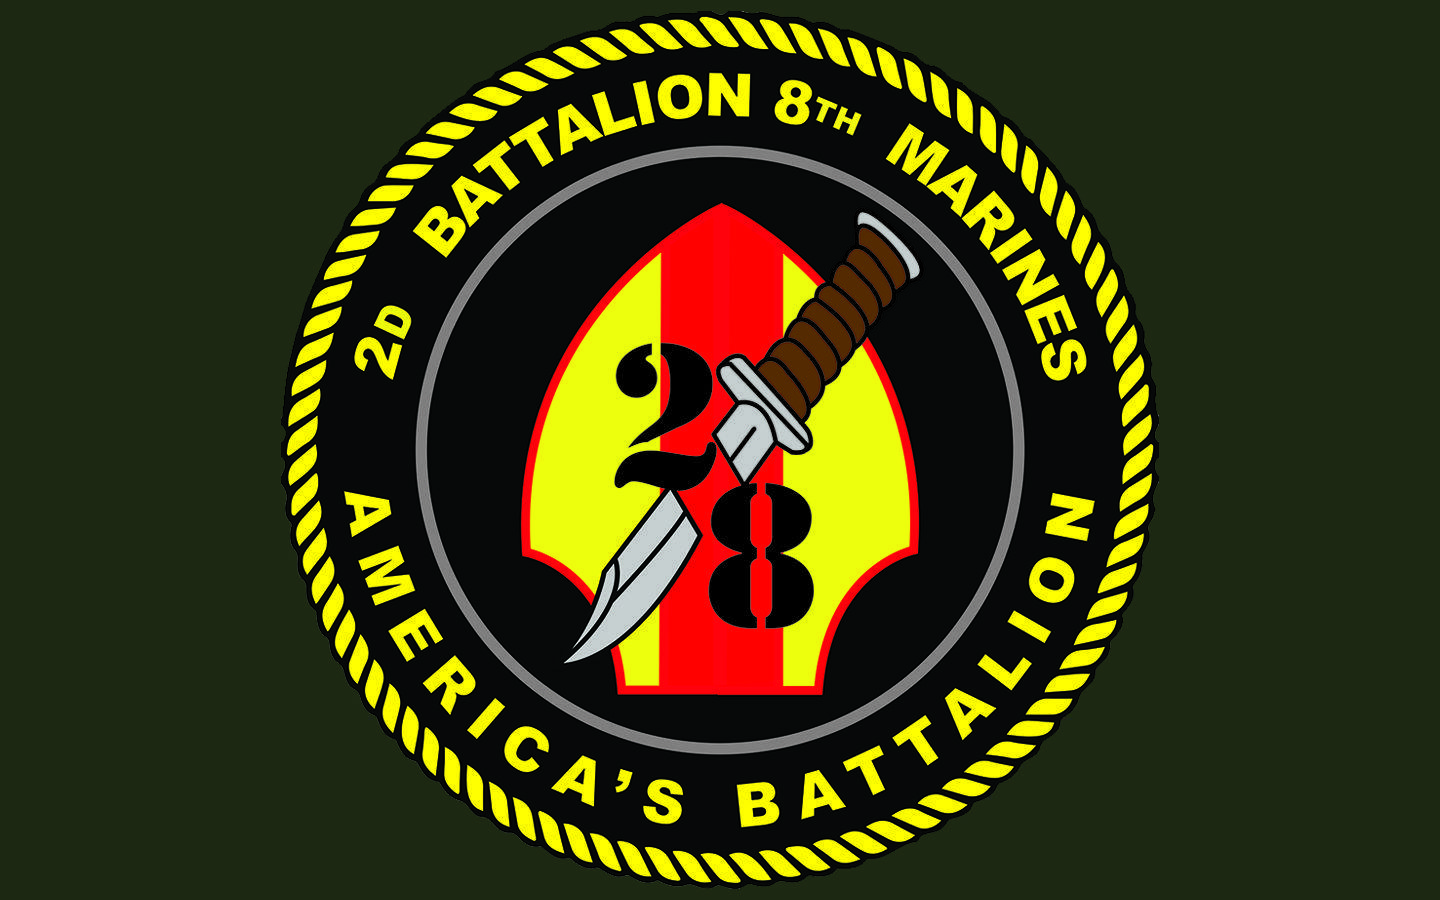 2nd Battalion 8th Marines Wallpaper. Ricky Designed Desktop